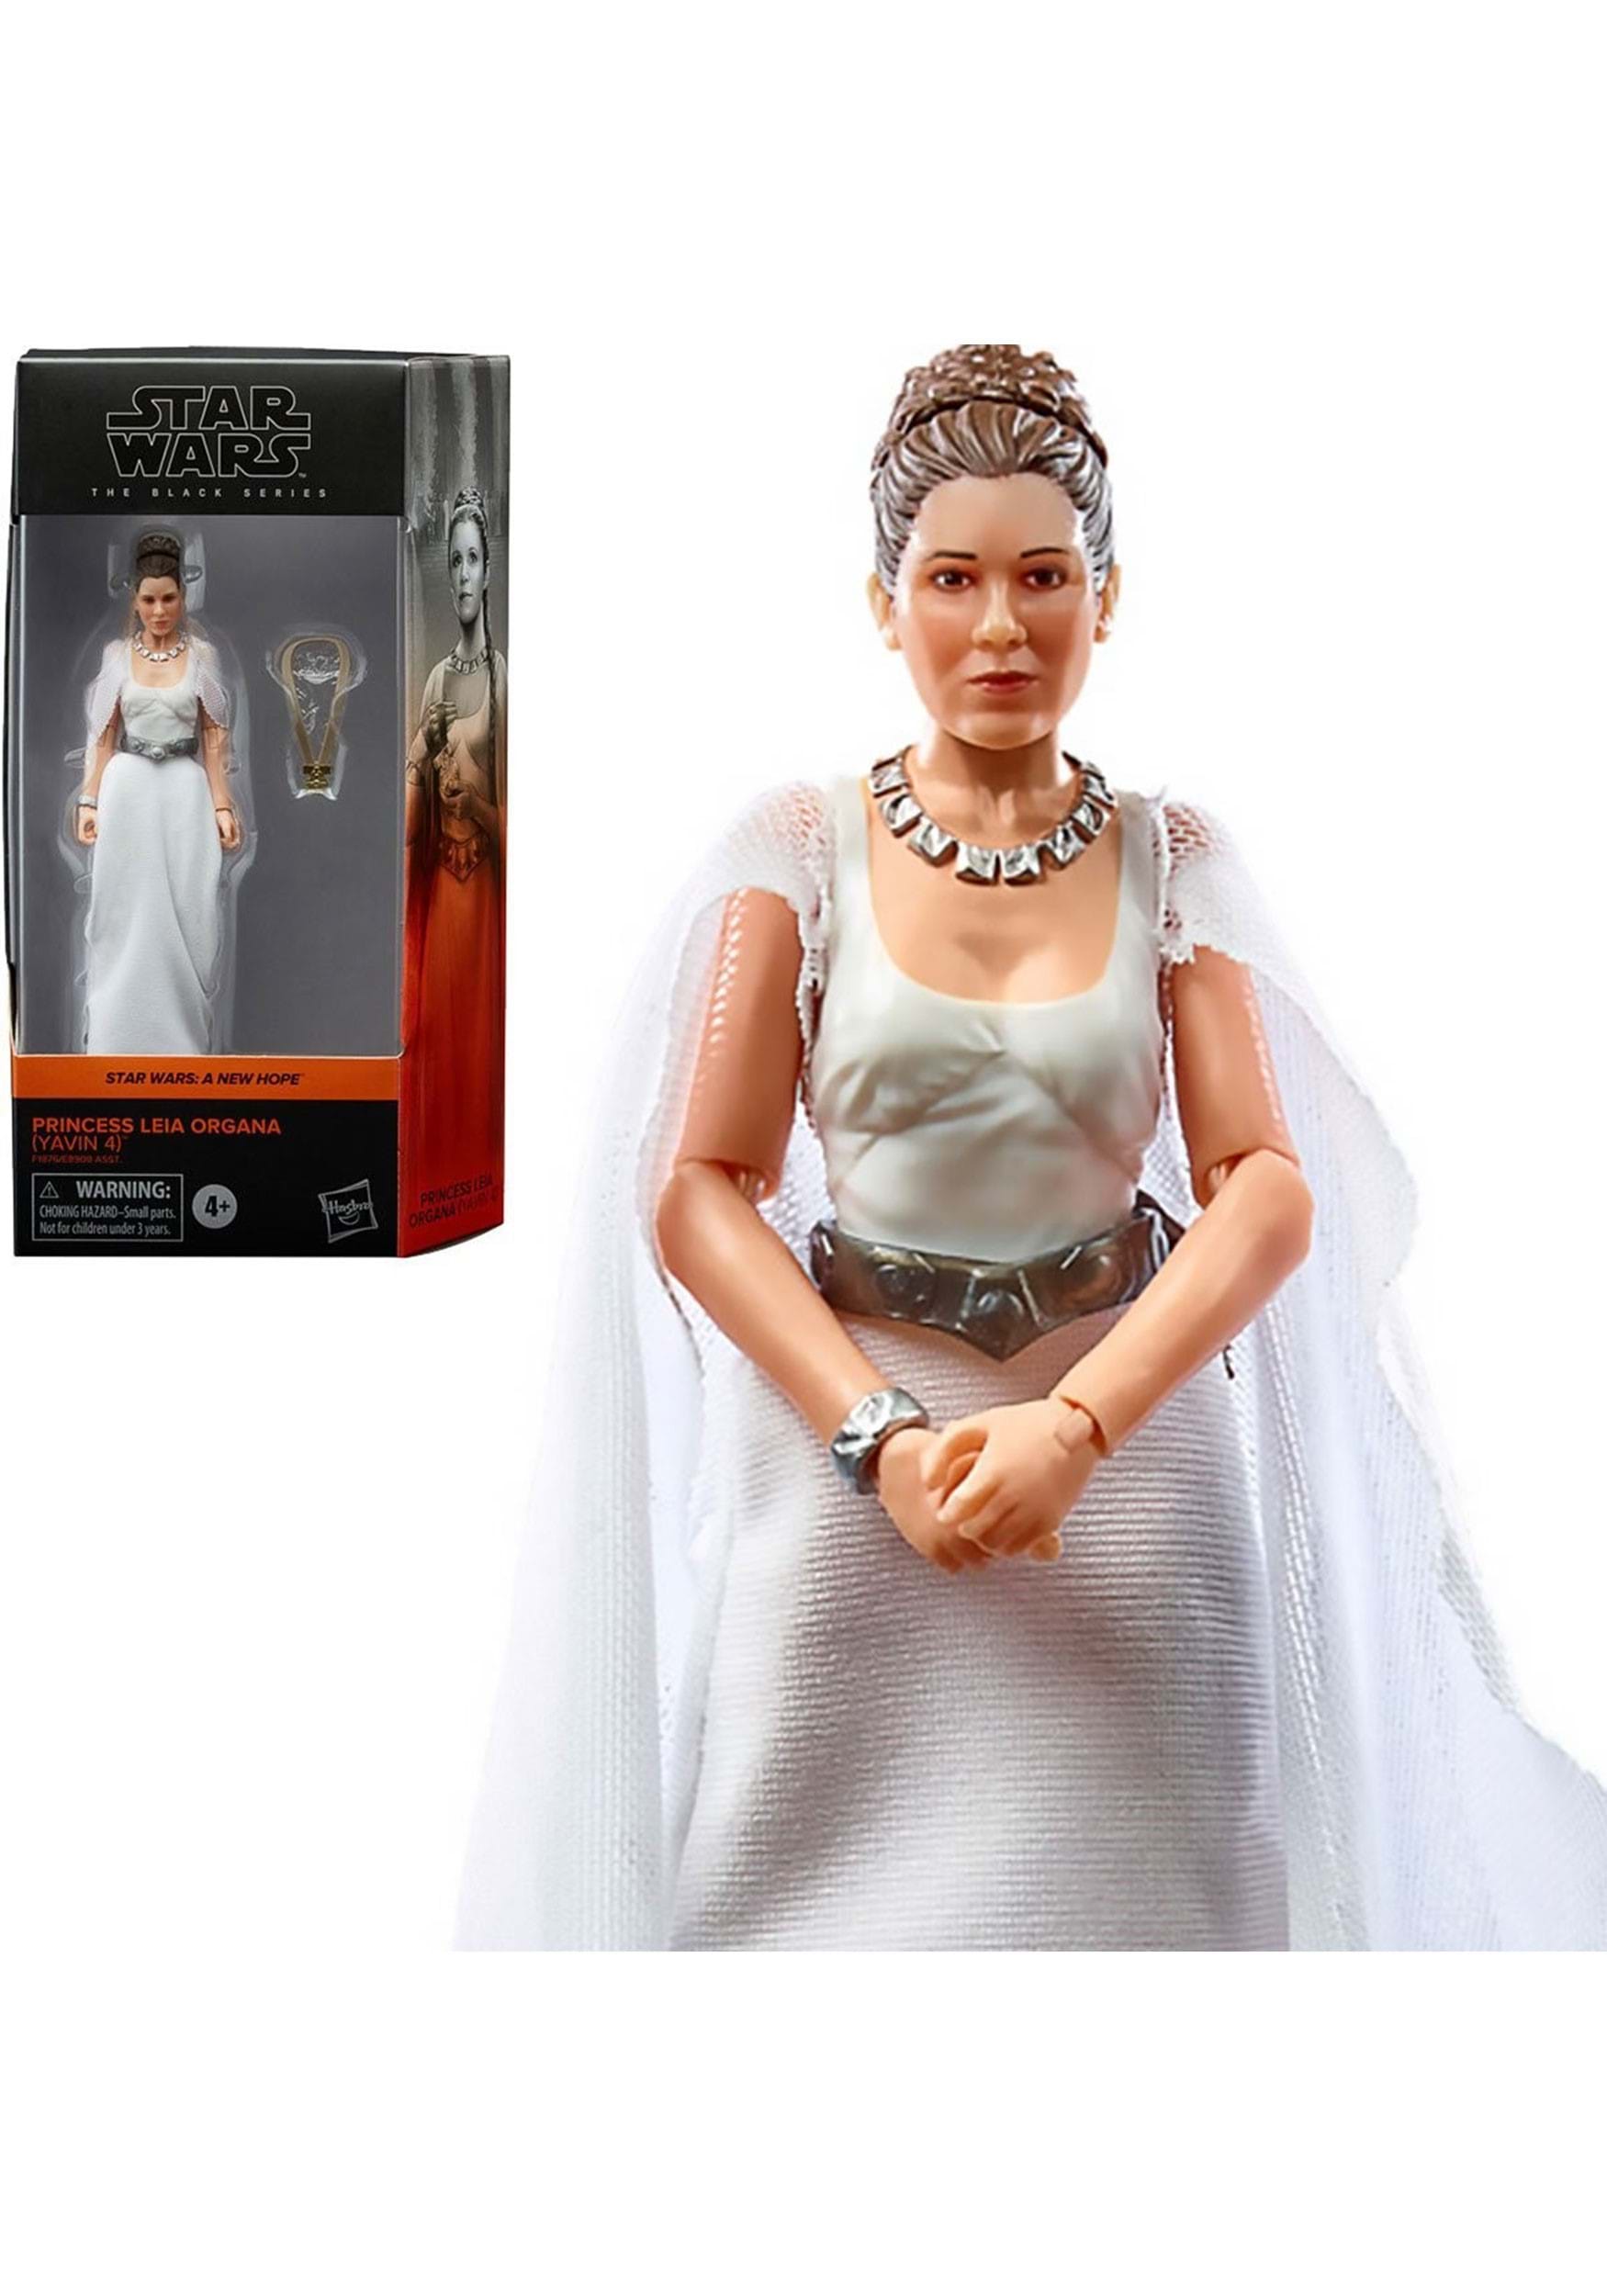 Star Wars The Black Series Princess Leia Organa 6" Scale Action Figure